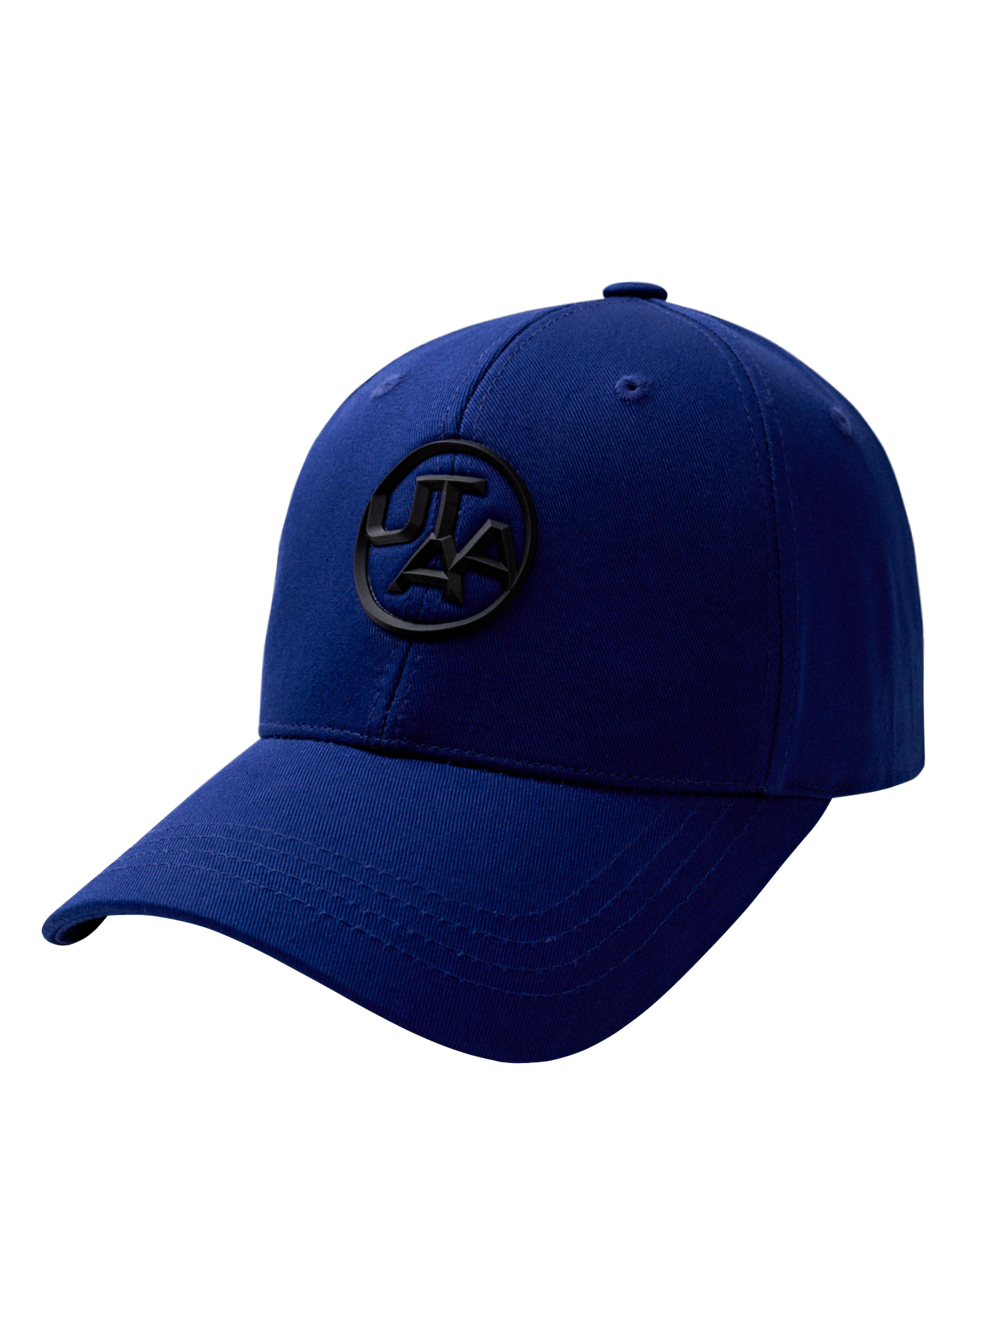 UTAA Figure Emblem Color Cap : Blue (UC0GCU118BL)